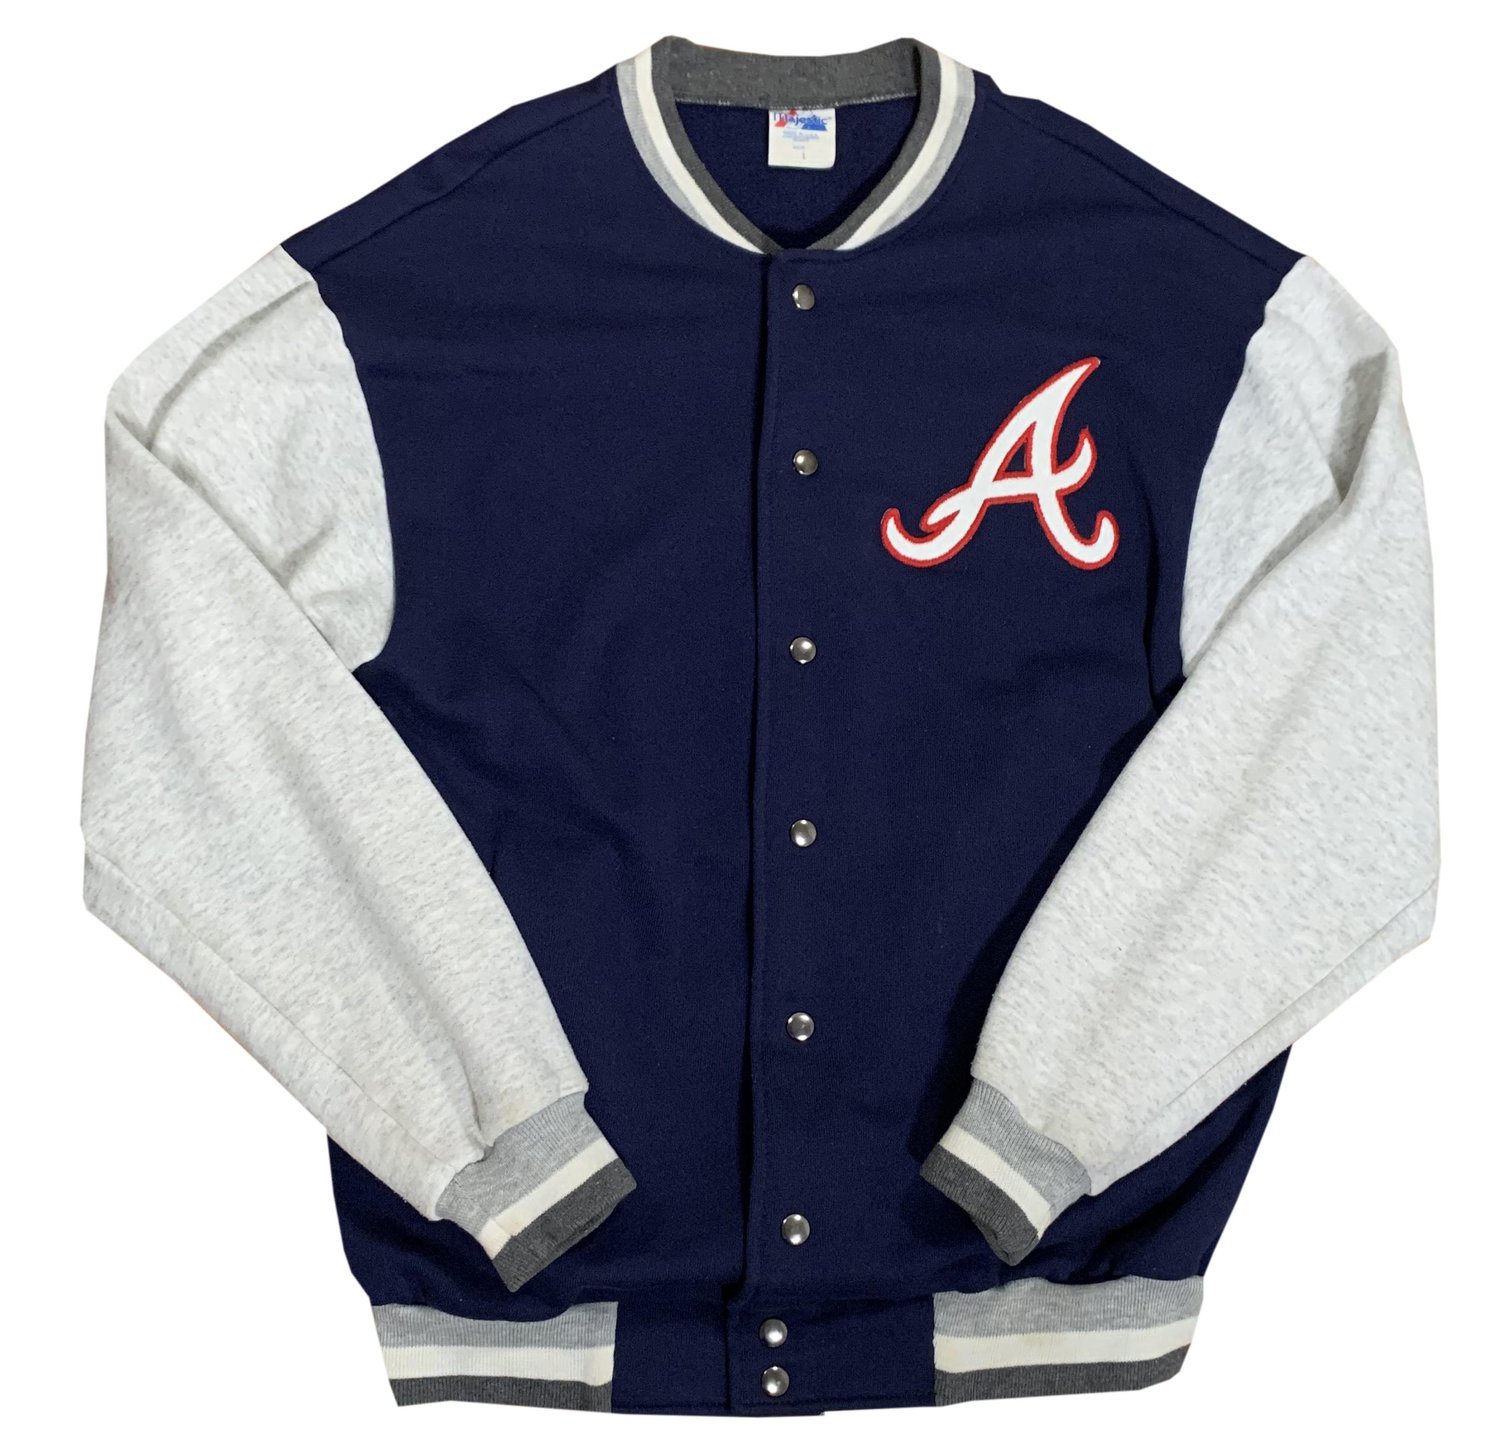 Majestic vintage MLB Atlanta Braves 90s - We Love Sports Shirts